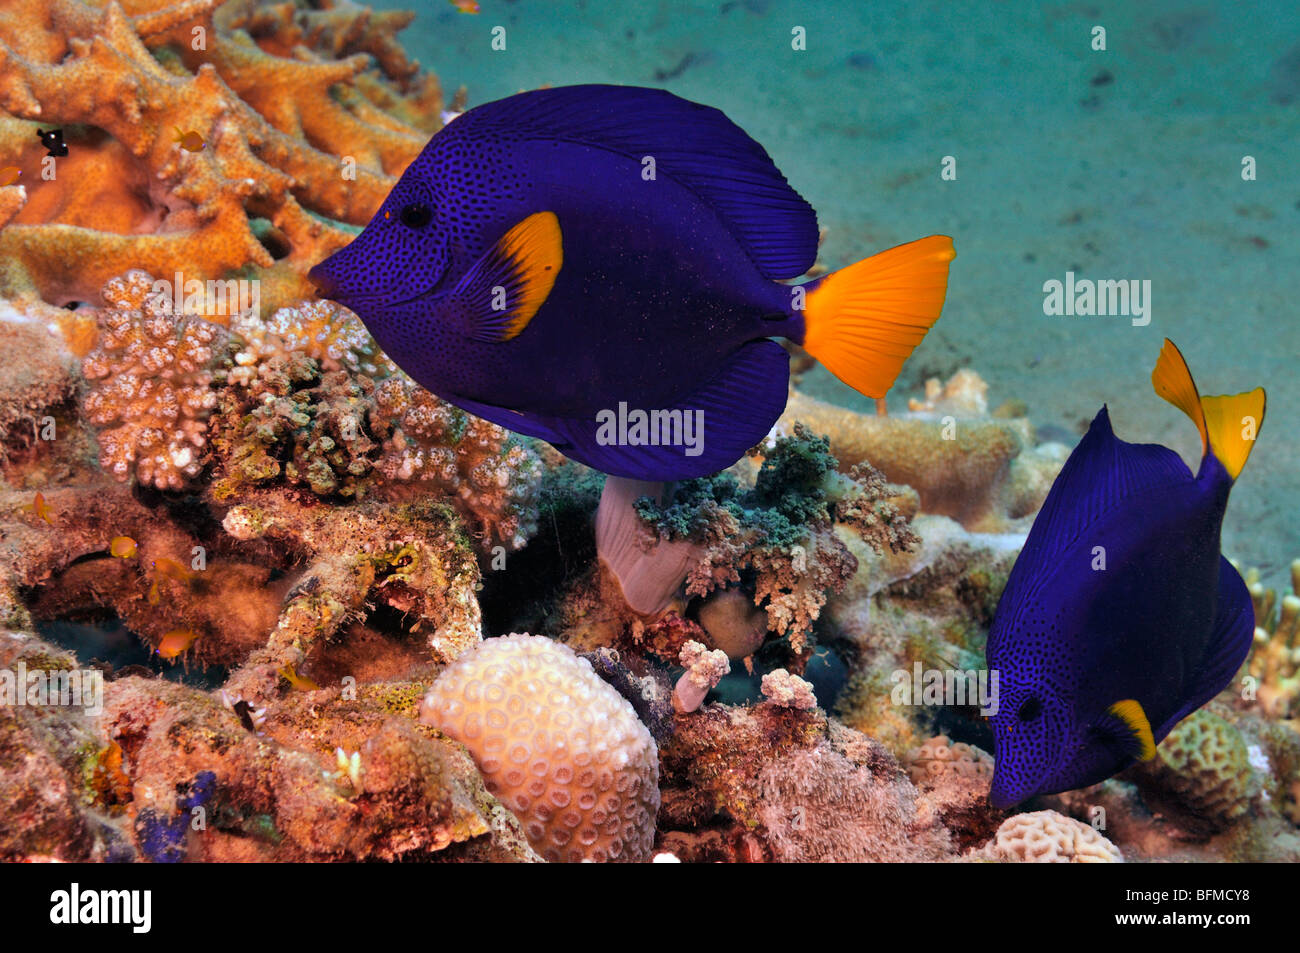 Yellowtail tang fish, Zebrasoma xanthurum, on coral reef. 'Red Sea' Stock Photo